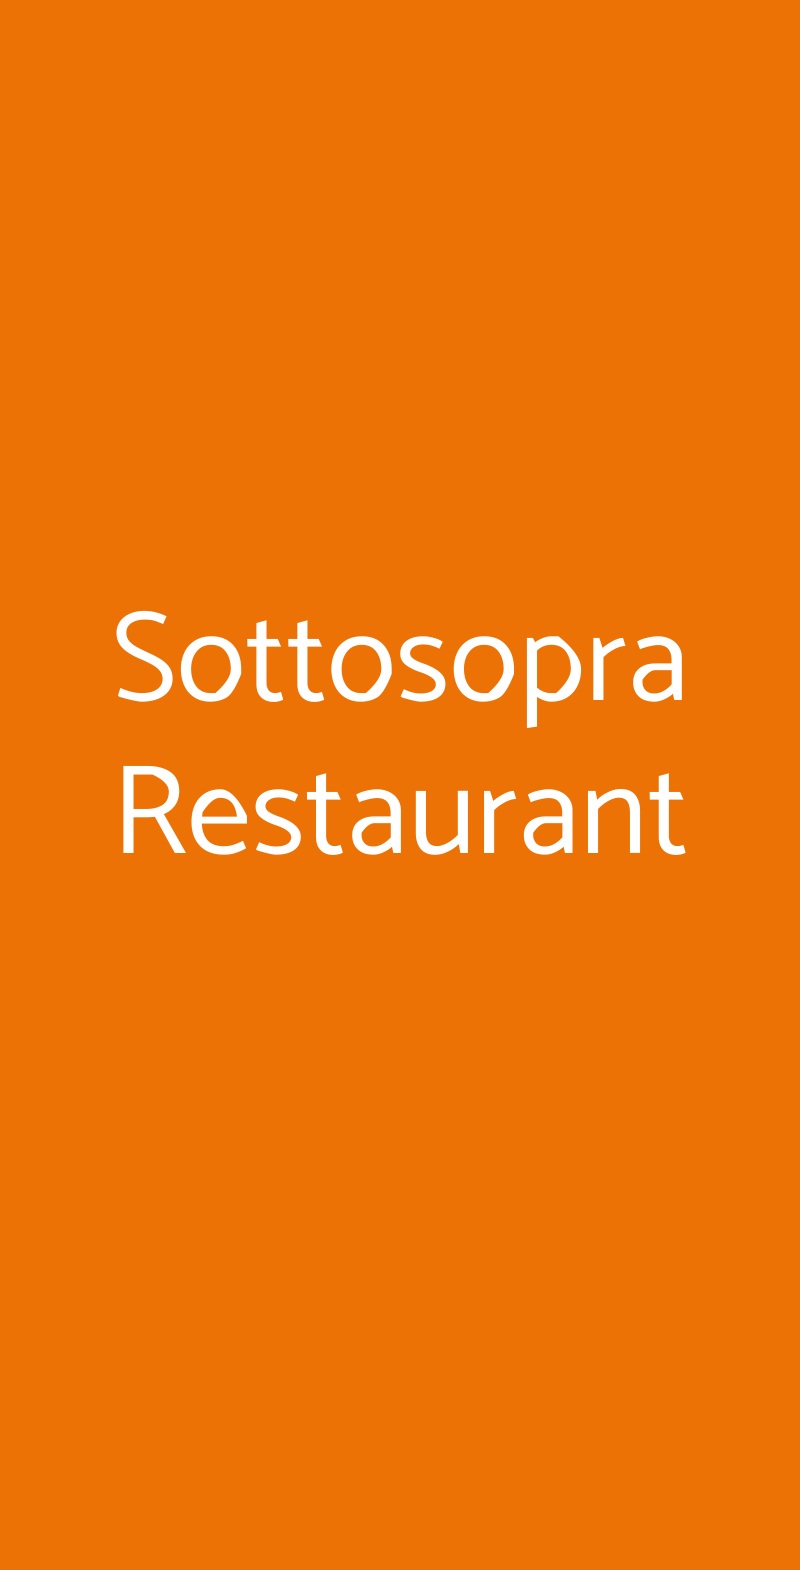 Sottosopra Restaurant Roma menù 1 pagina